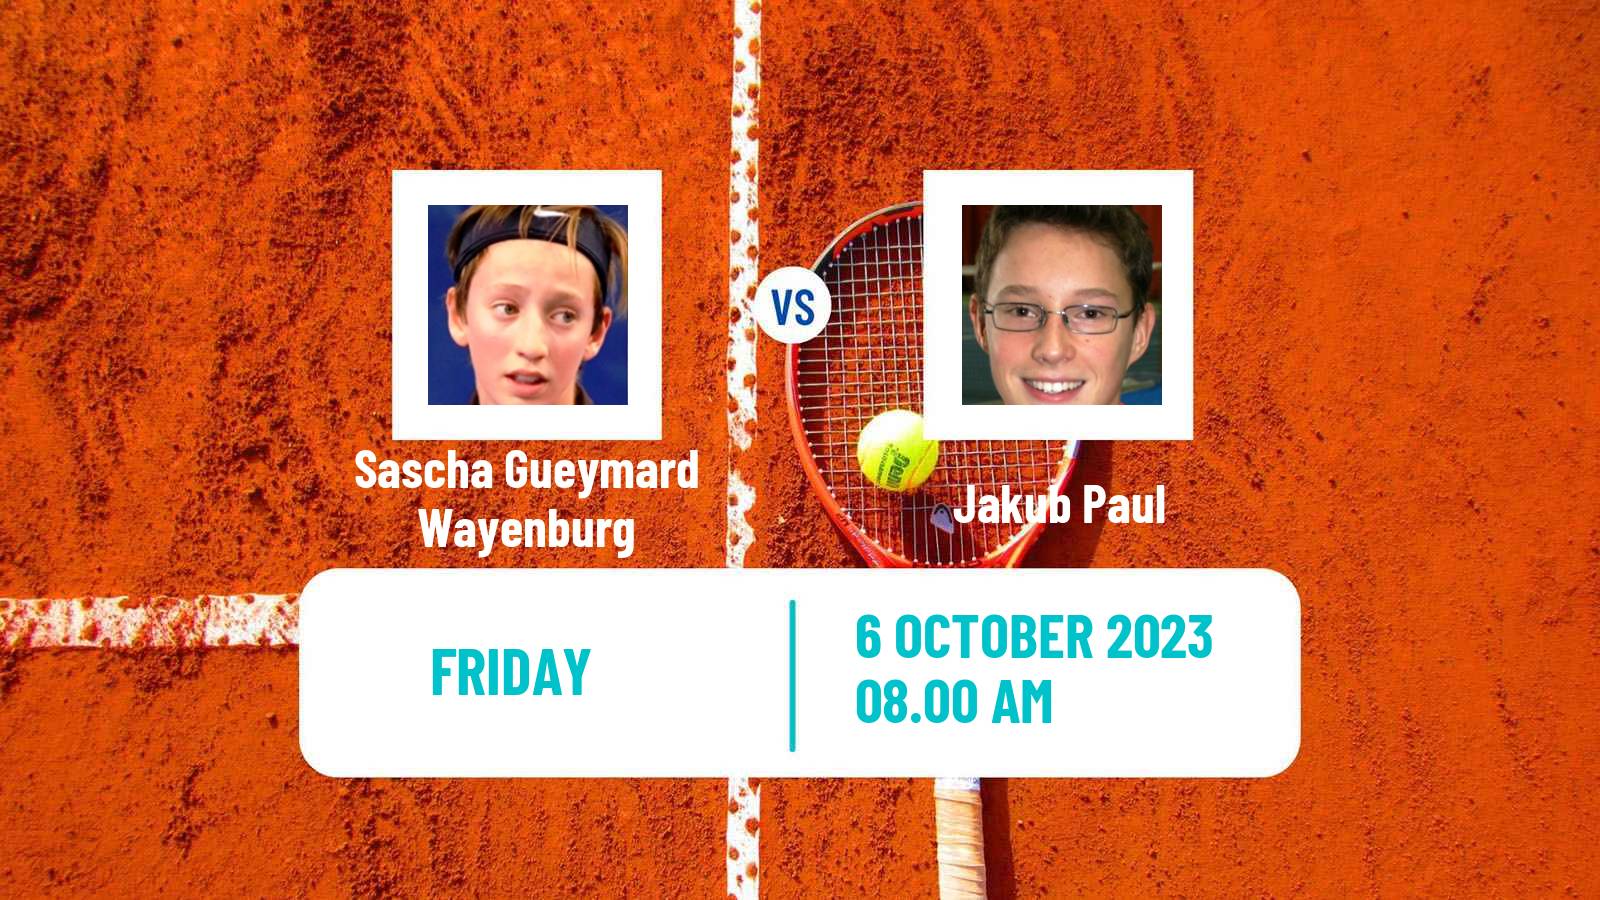 Tennis ITF M25 Nevers Men Sascha Gueymard Wayenburg - Jakub Paul